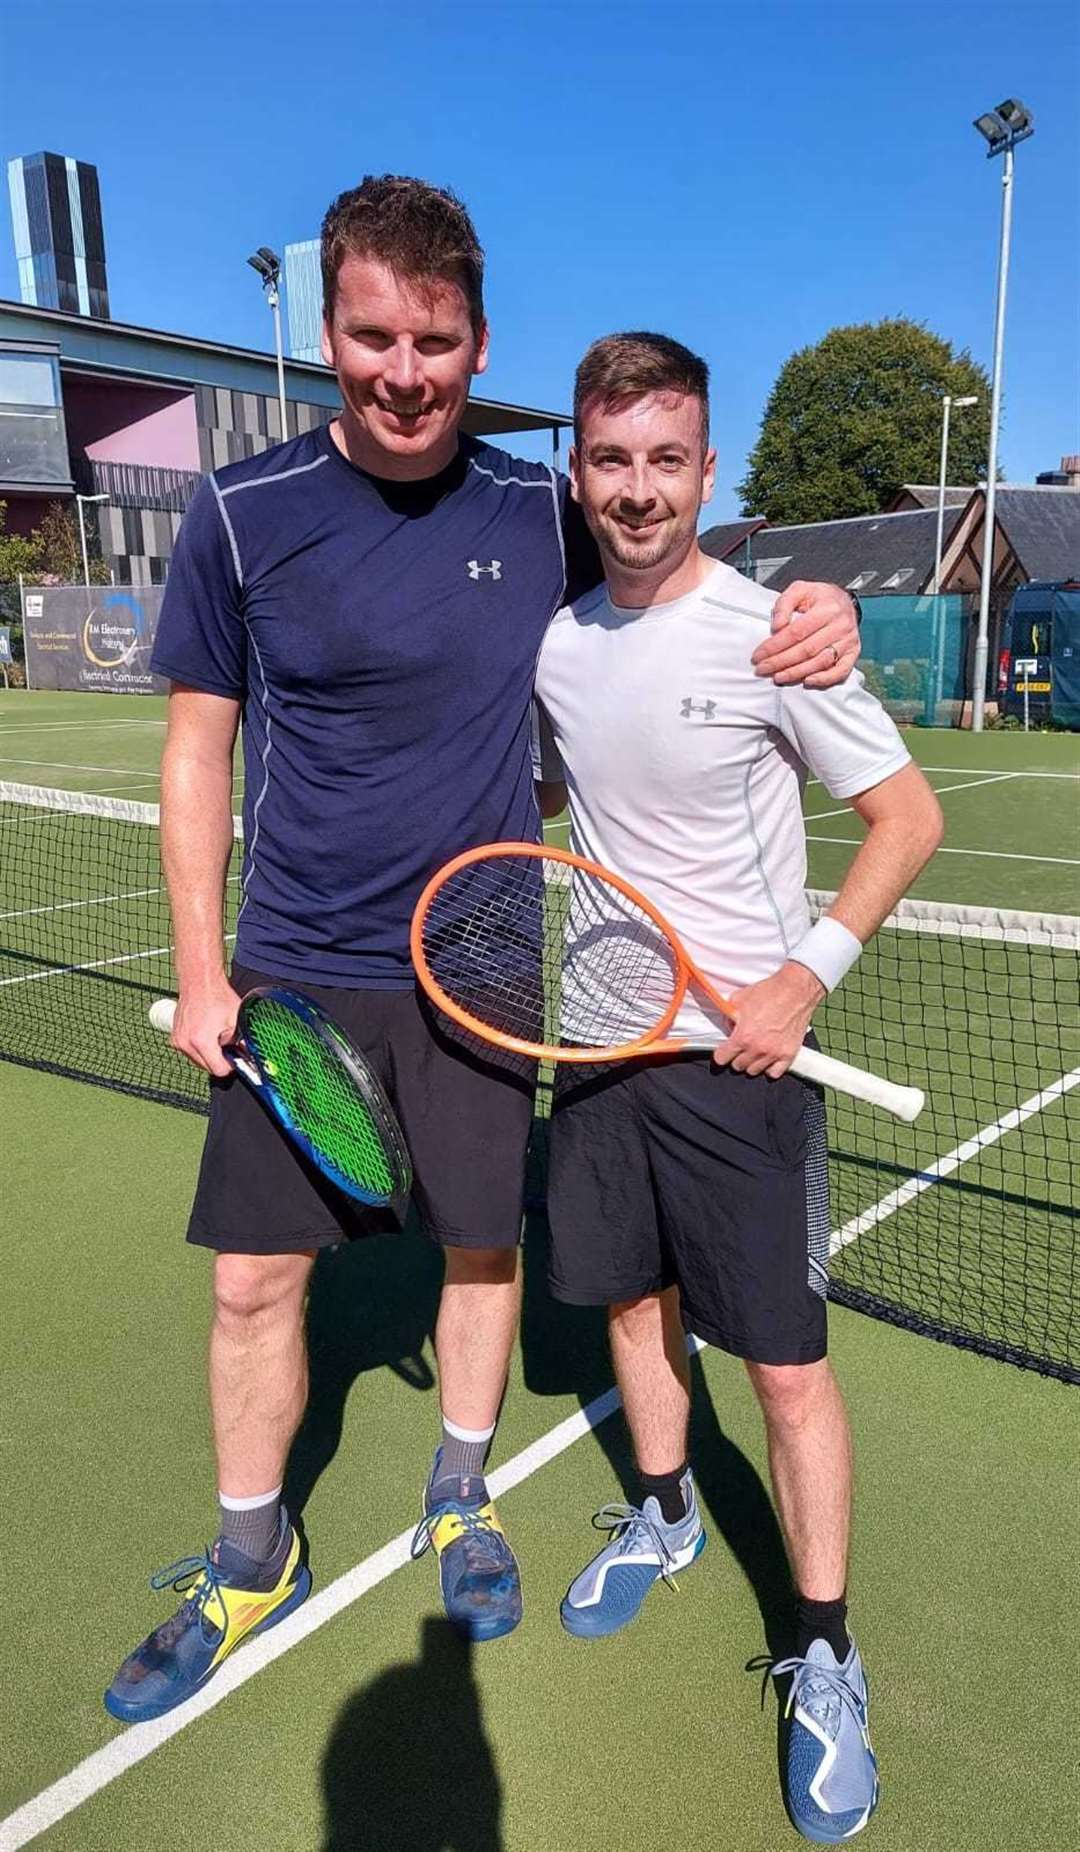 Adrian Duthie needed a tie-break in the third set to win the Inverness Tennis Club men's championship against Scott Henderson.